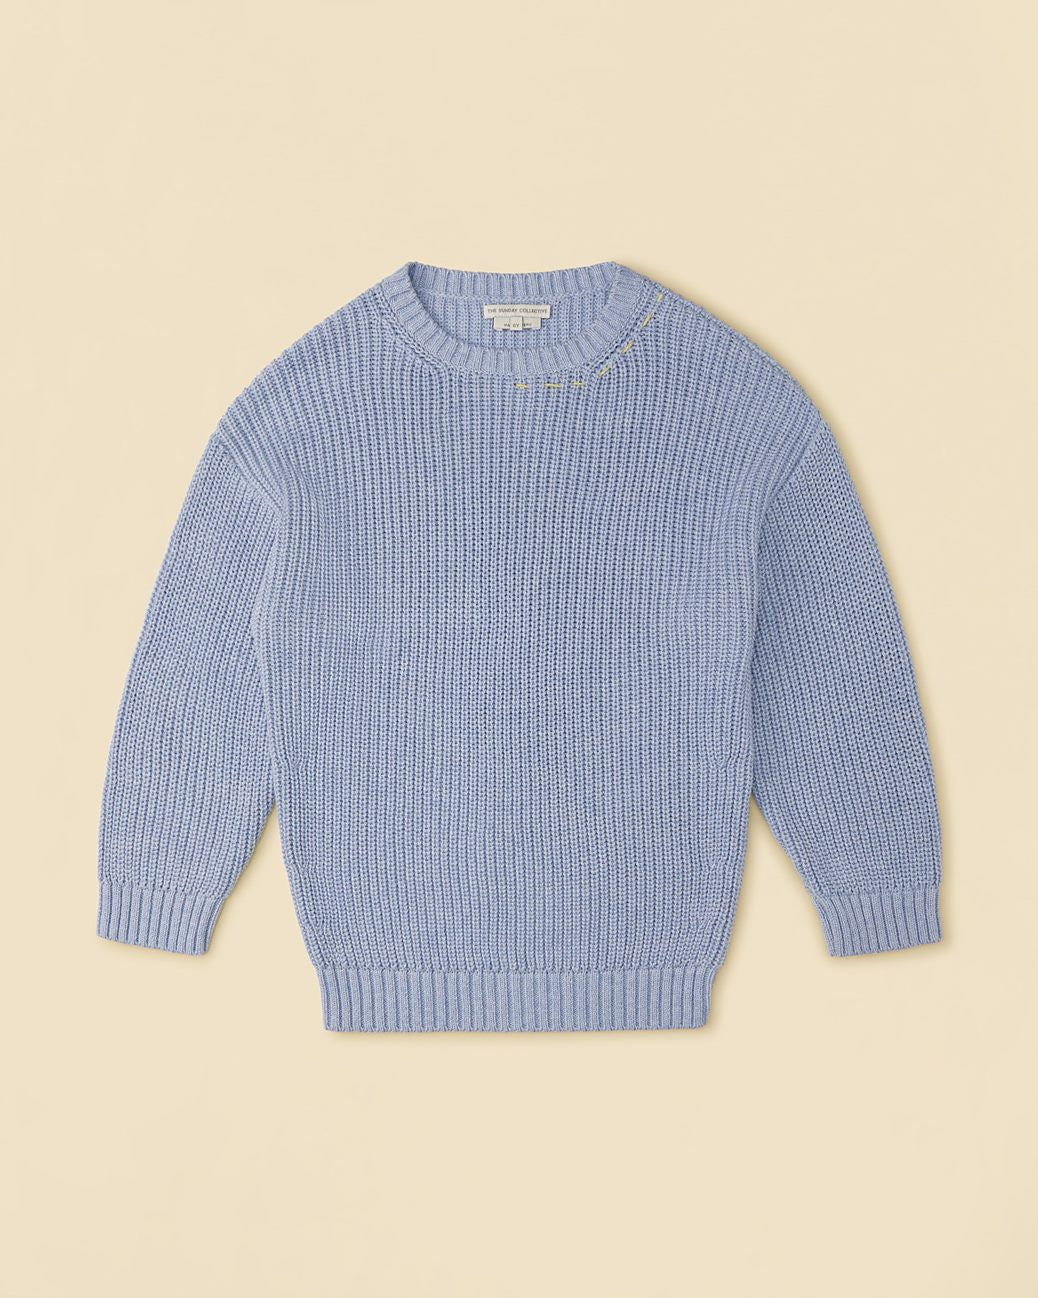 Sky Blue Melange Sweater - Parkette.